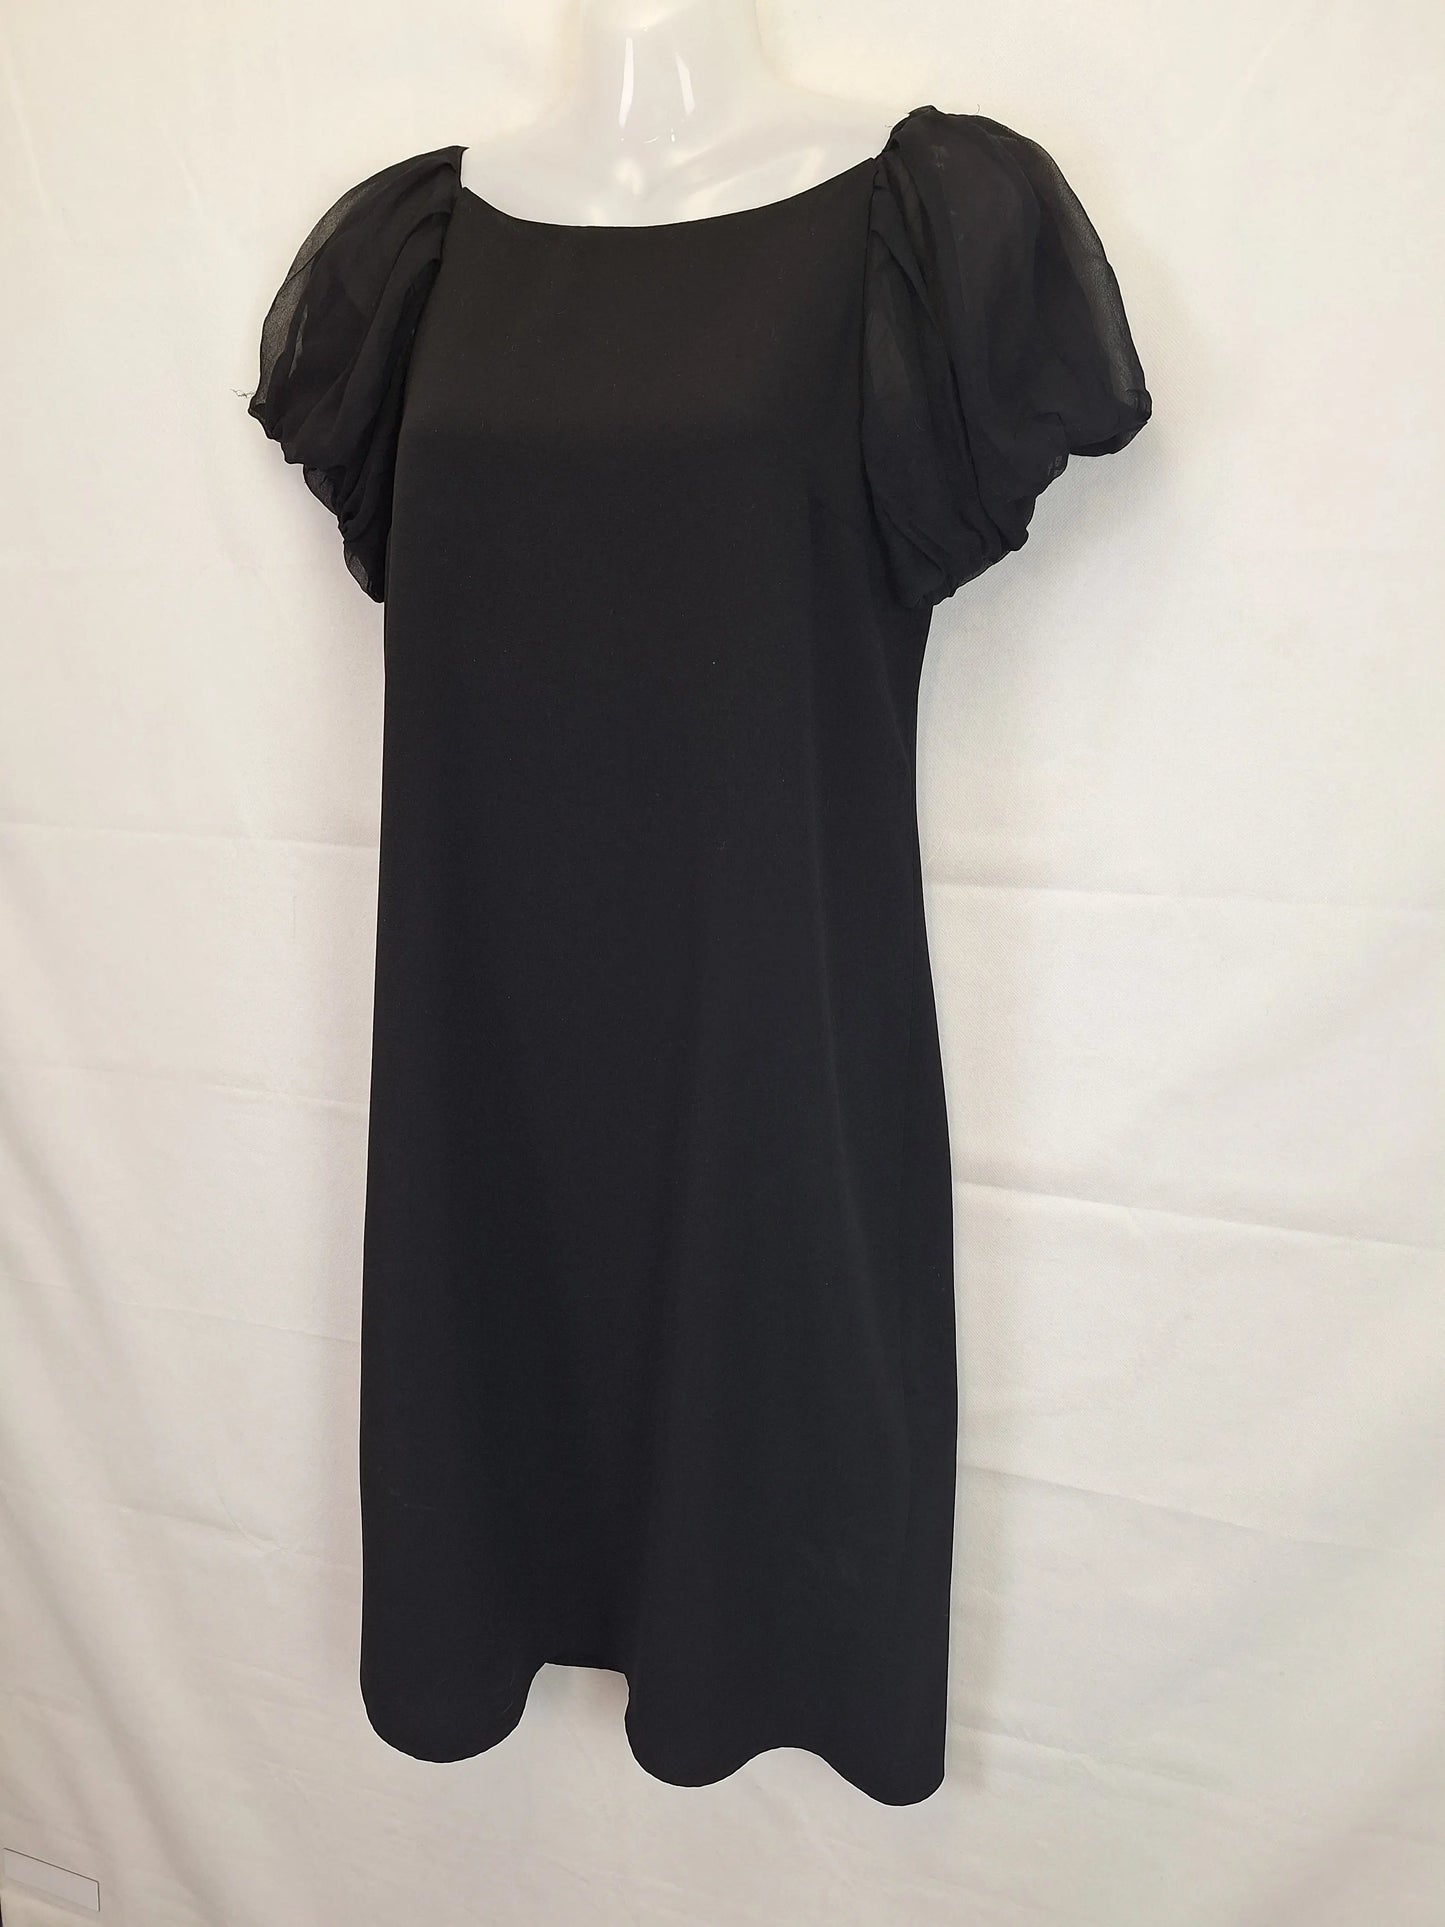 Carla Zampatti Basic Staple Midi Dress Size 6 by SwapUp-Online Second Hand Store-Online Thrift Store